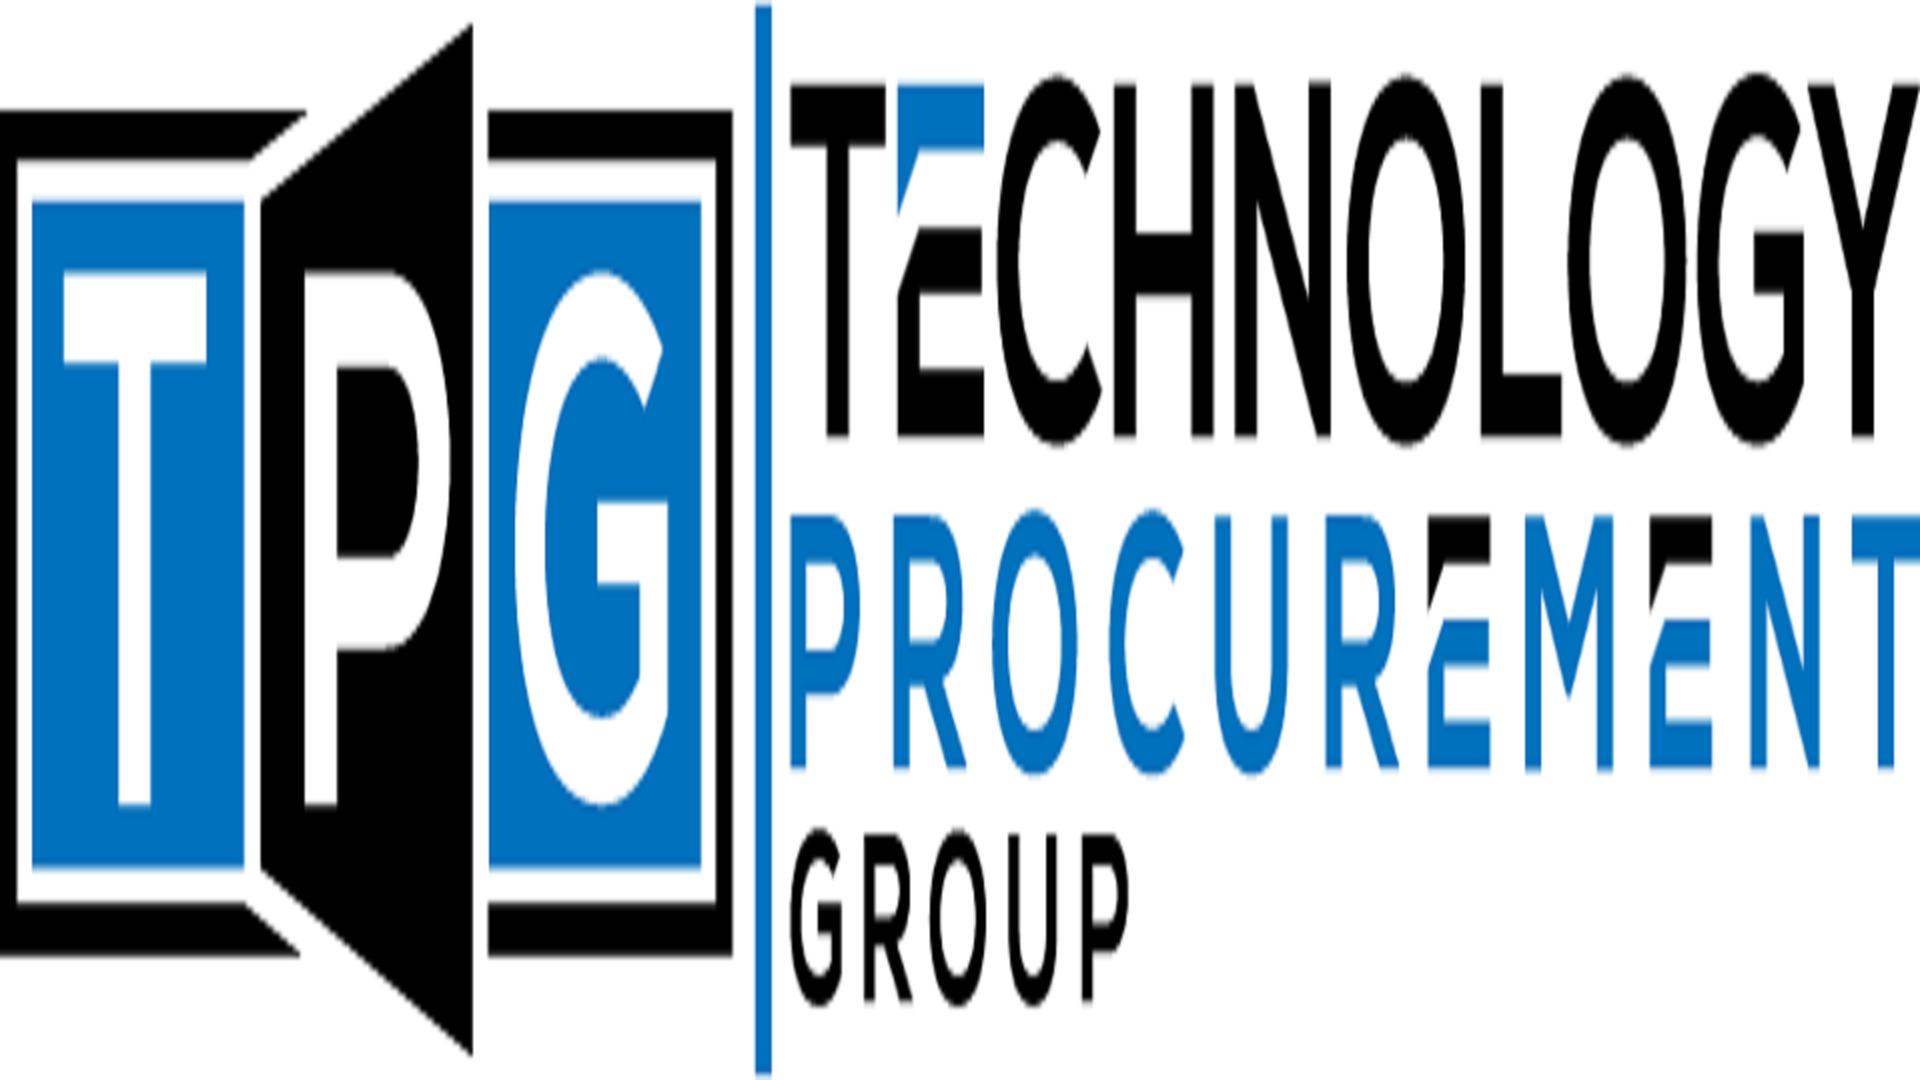 Technology Procurement Group-logo